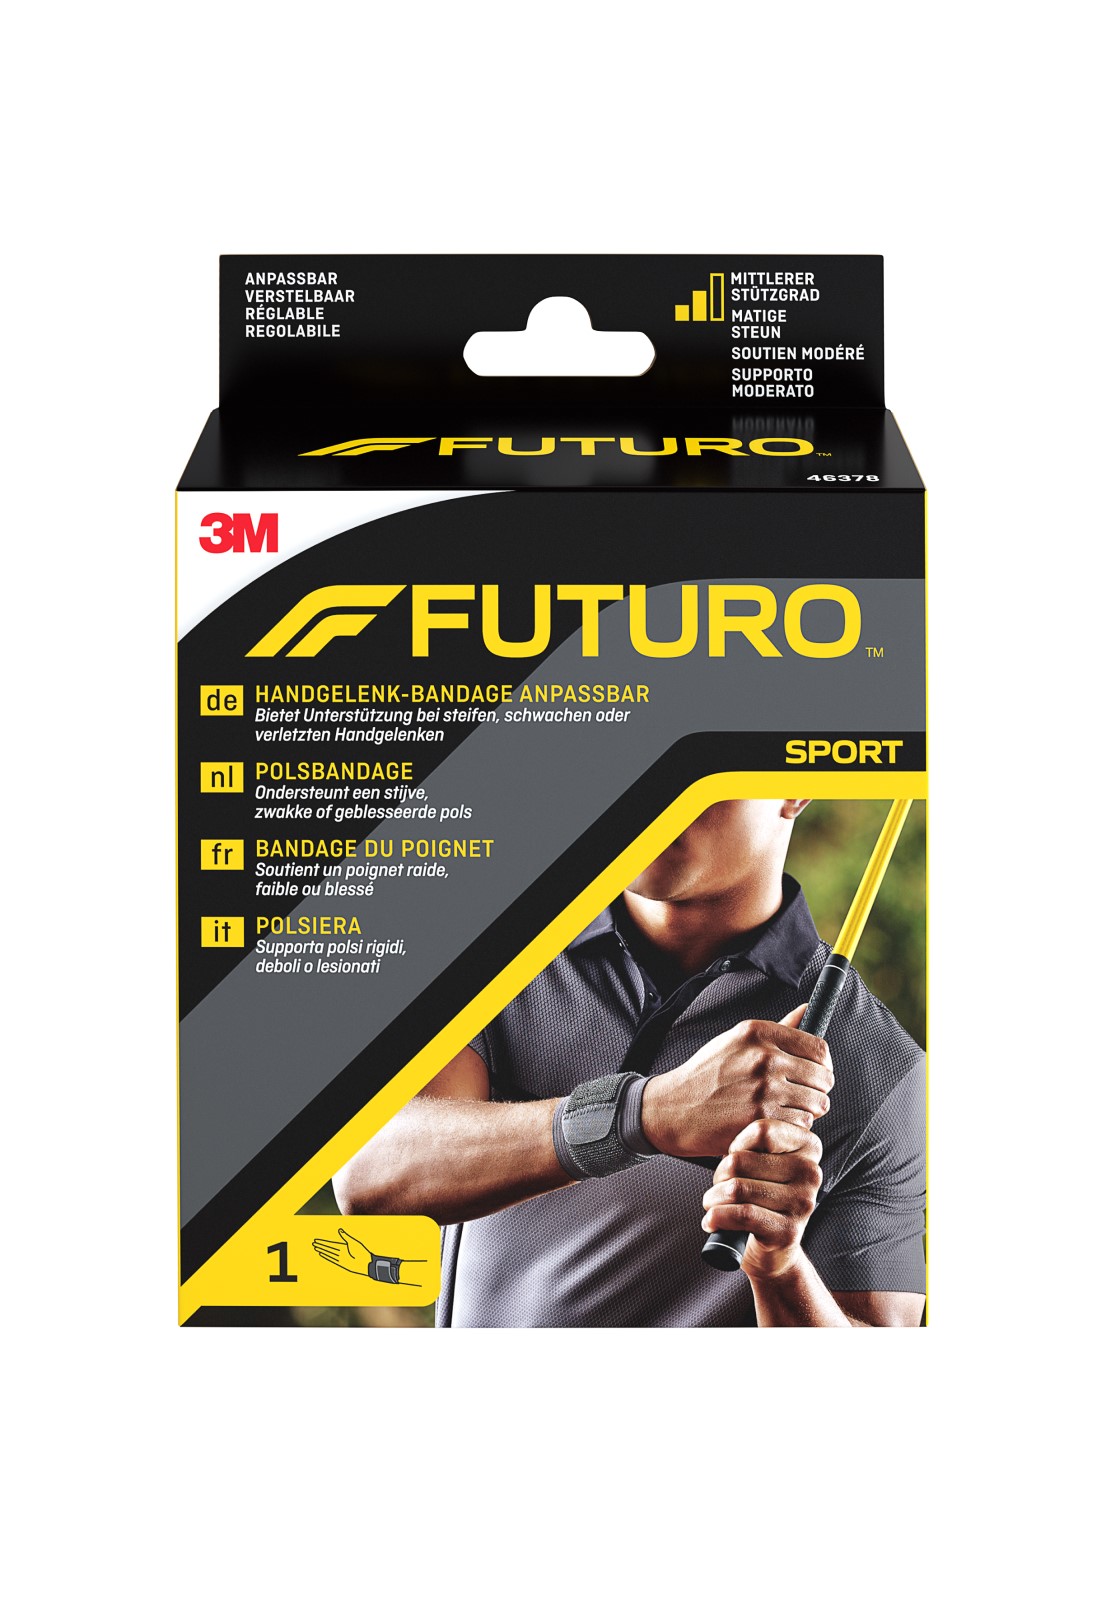 FUTURO™ Handgelenk-Bandage anpassbar 46378,Verstellbar SPORT